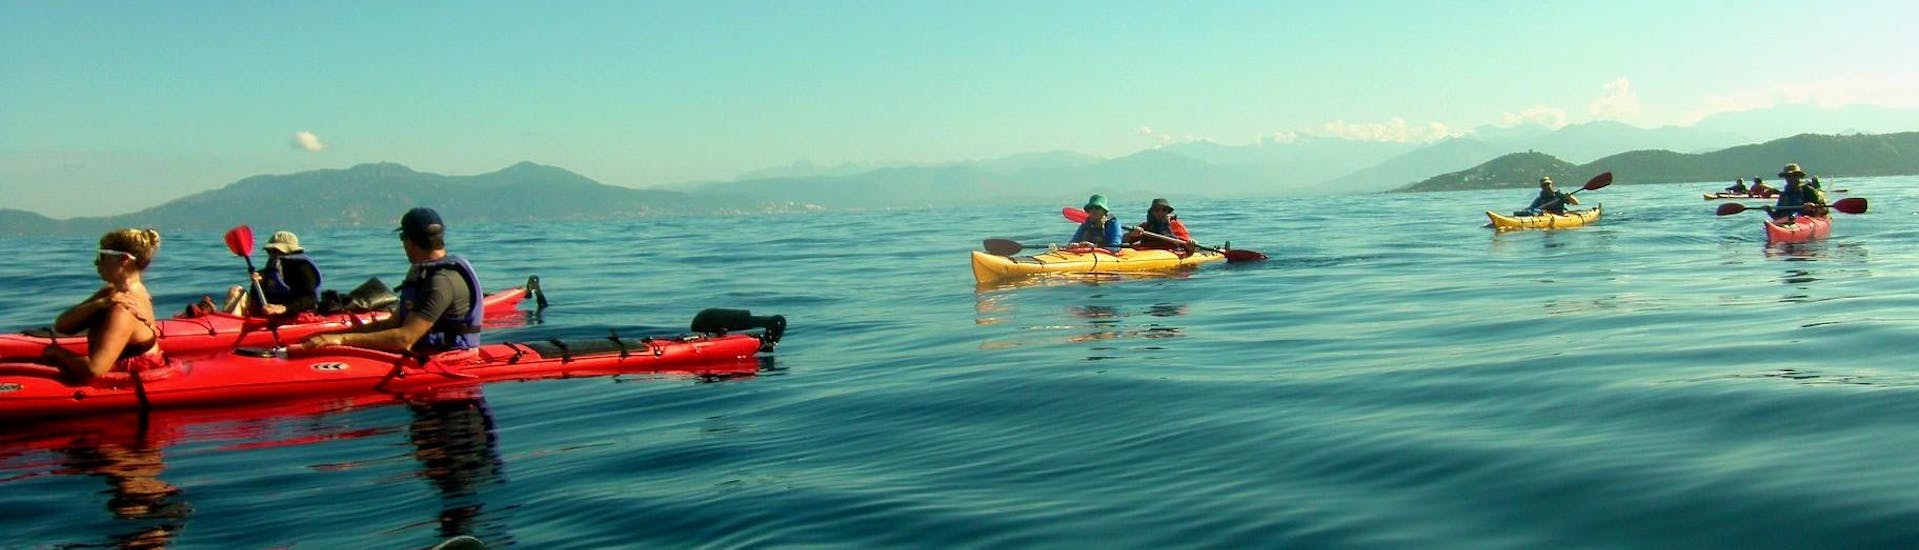 sea-kayaking-at-mare-e-sole-beach-corse-aventure-hero